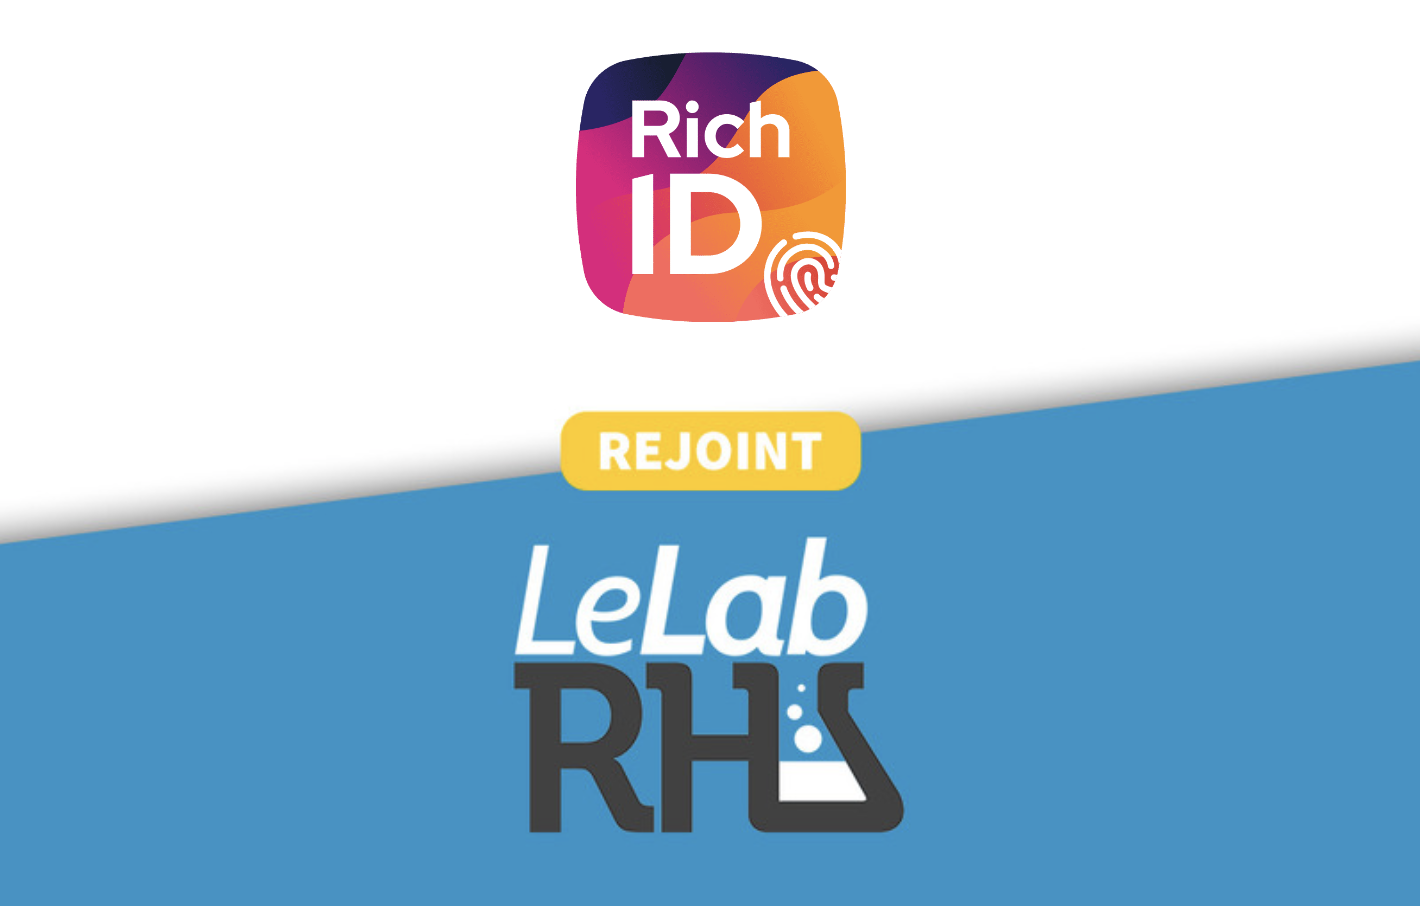 Rich-ID rejoint le LAB RH